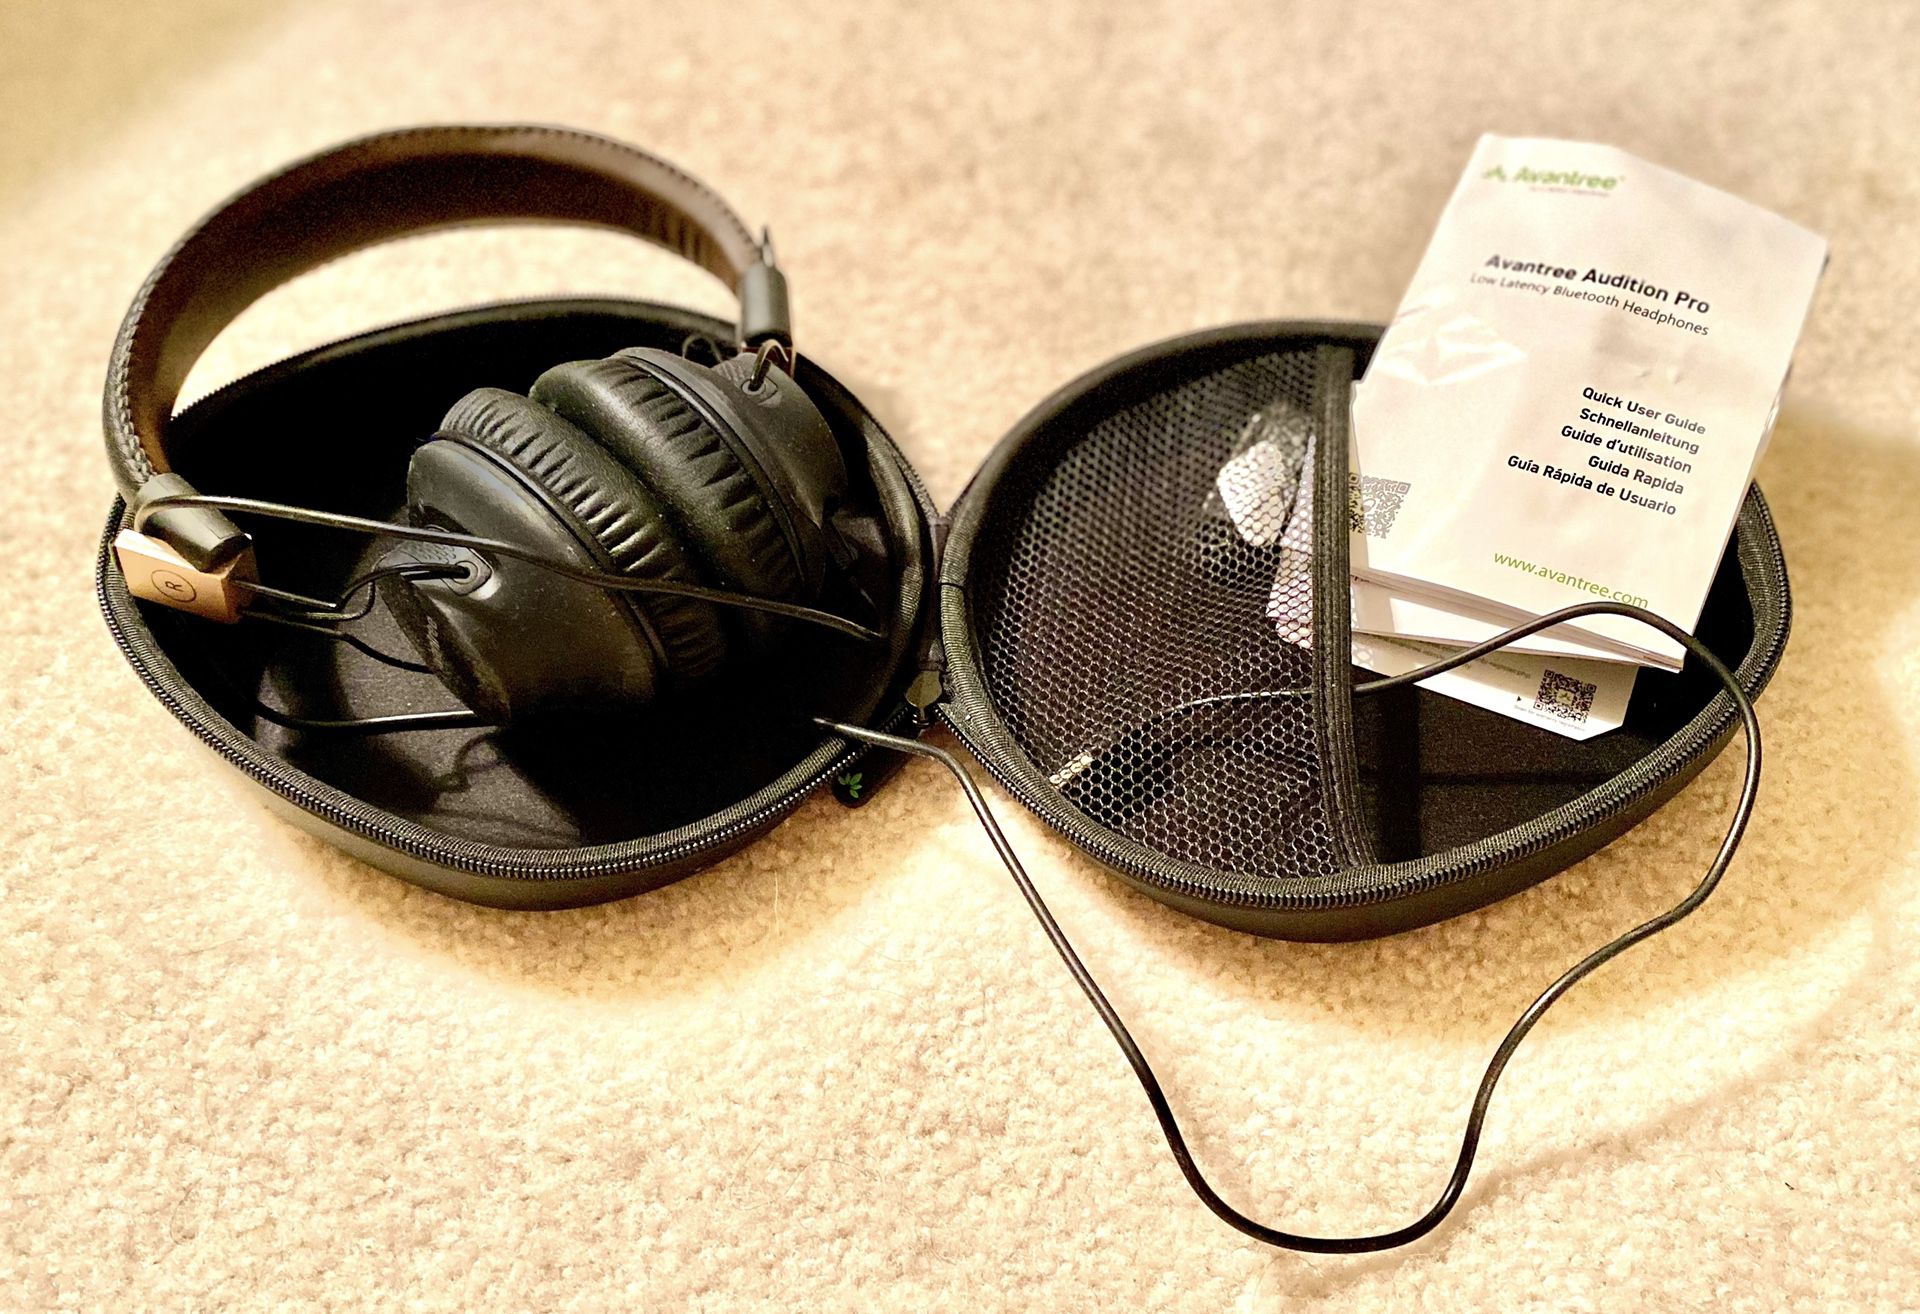 Avantree Audition Pro Low Latency Bluetooth Headphones, Black/Brown 🎧